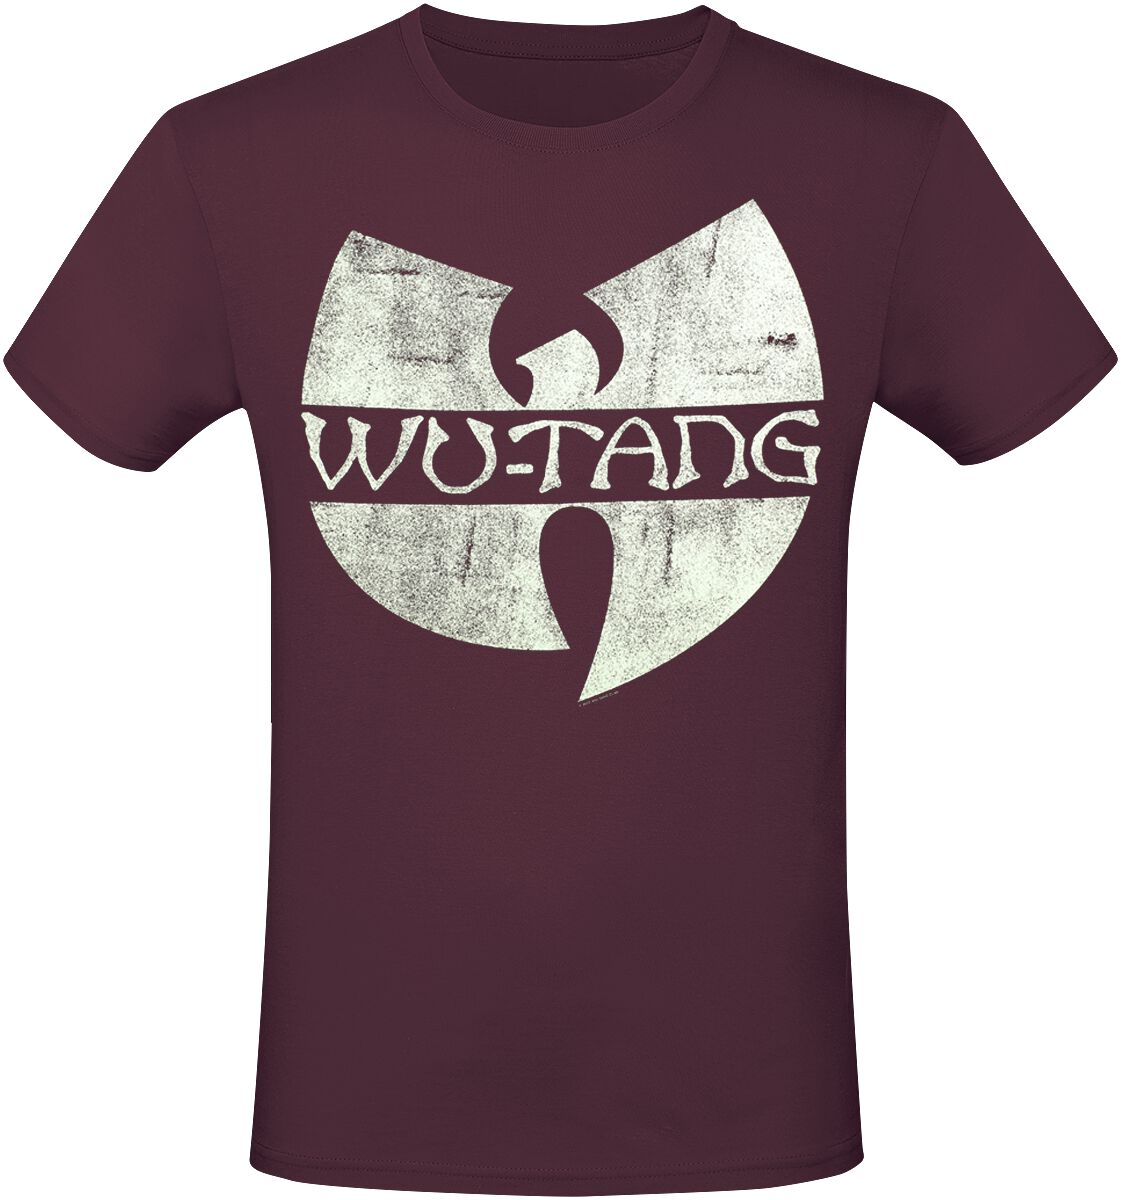 Wu-Tang Clan Logo T-Shirt rot in L